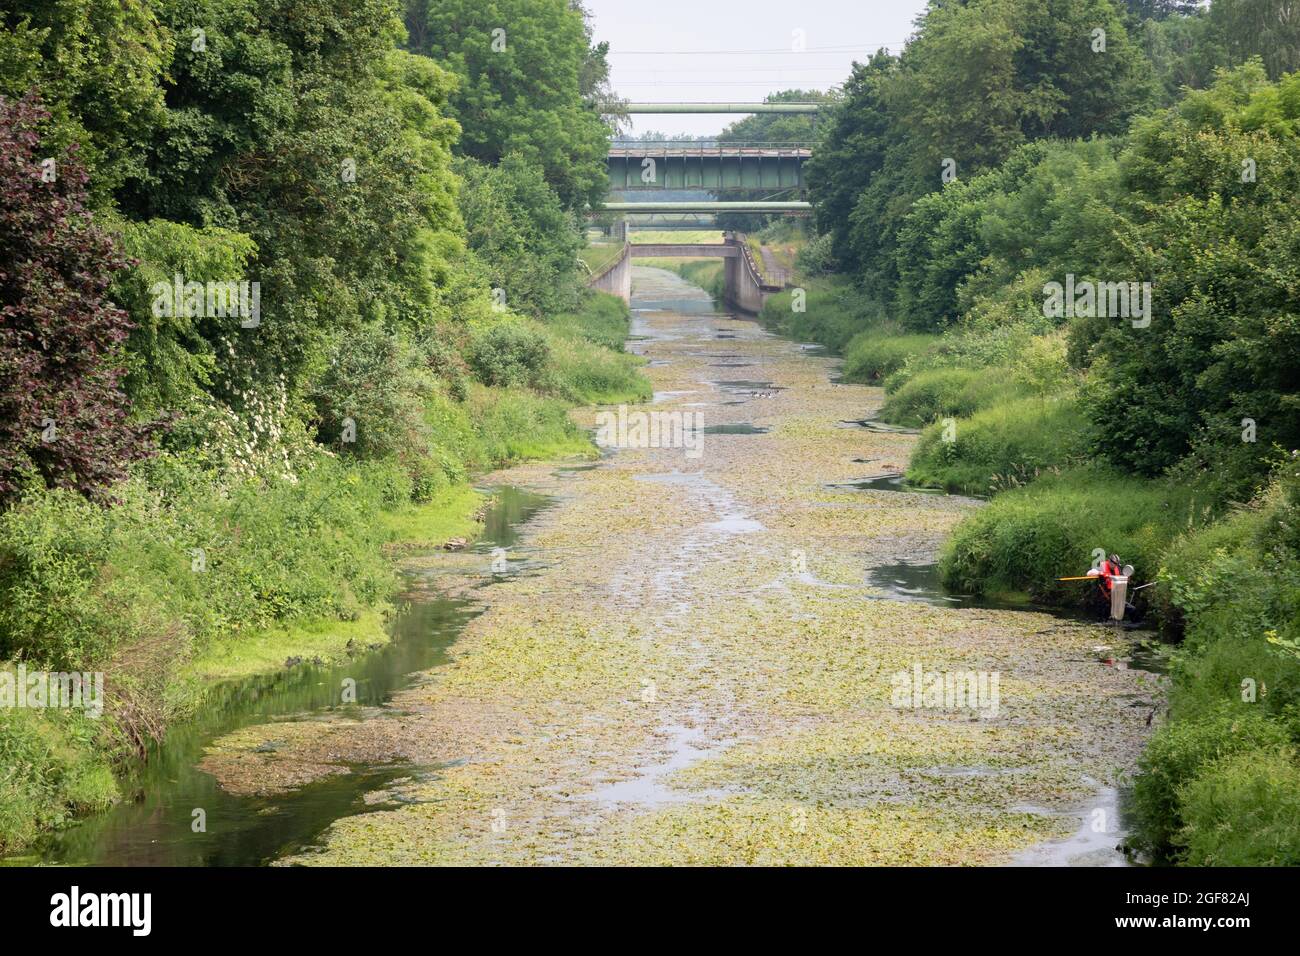 Renaturalized Emscher river in Dortmund, Germany Stock Photo